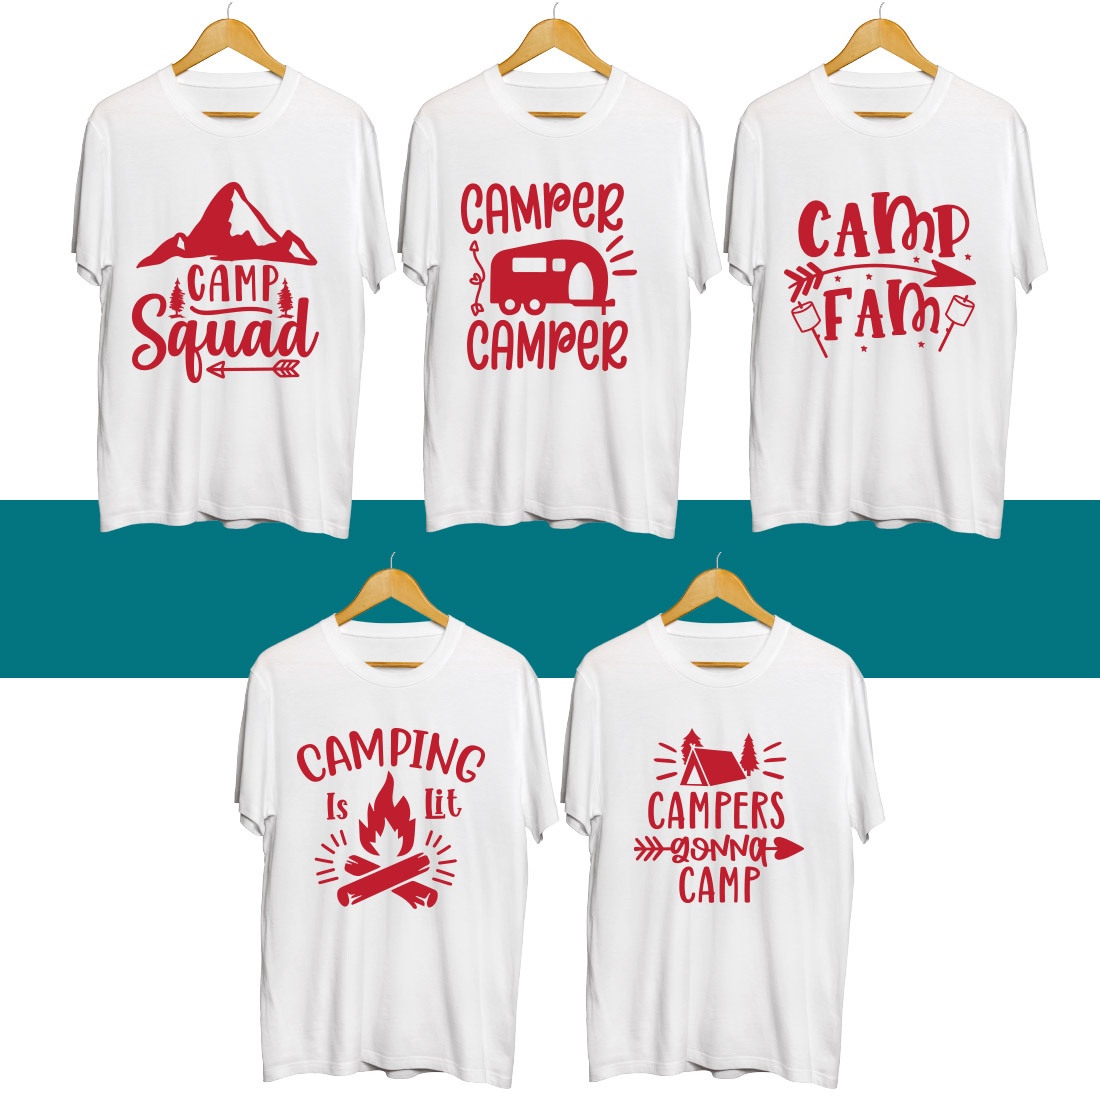 Camping SVG T Shirt Designs Bundle cover image.